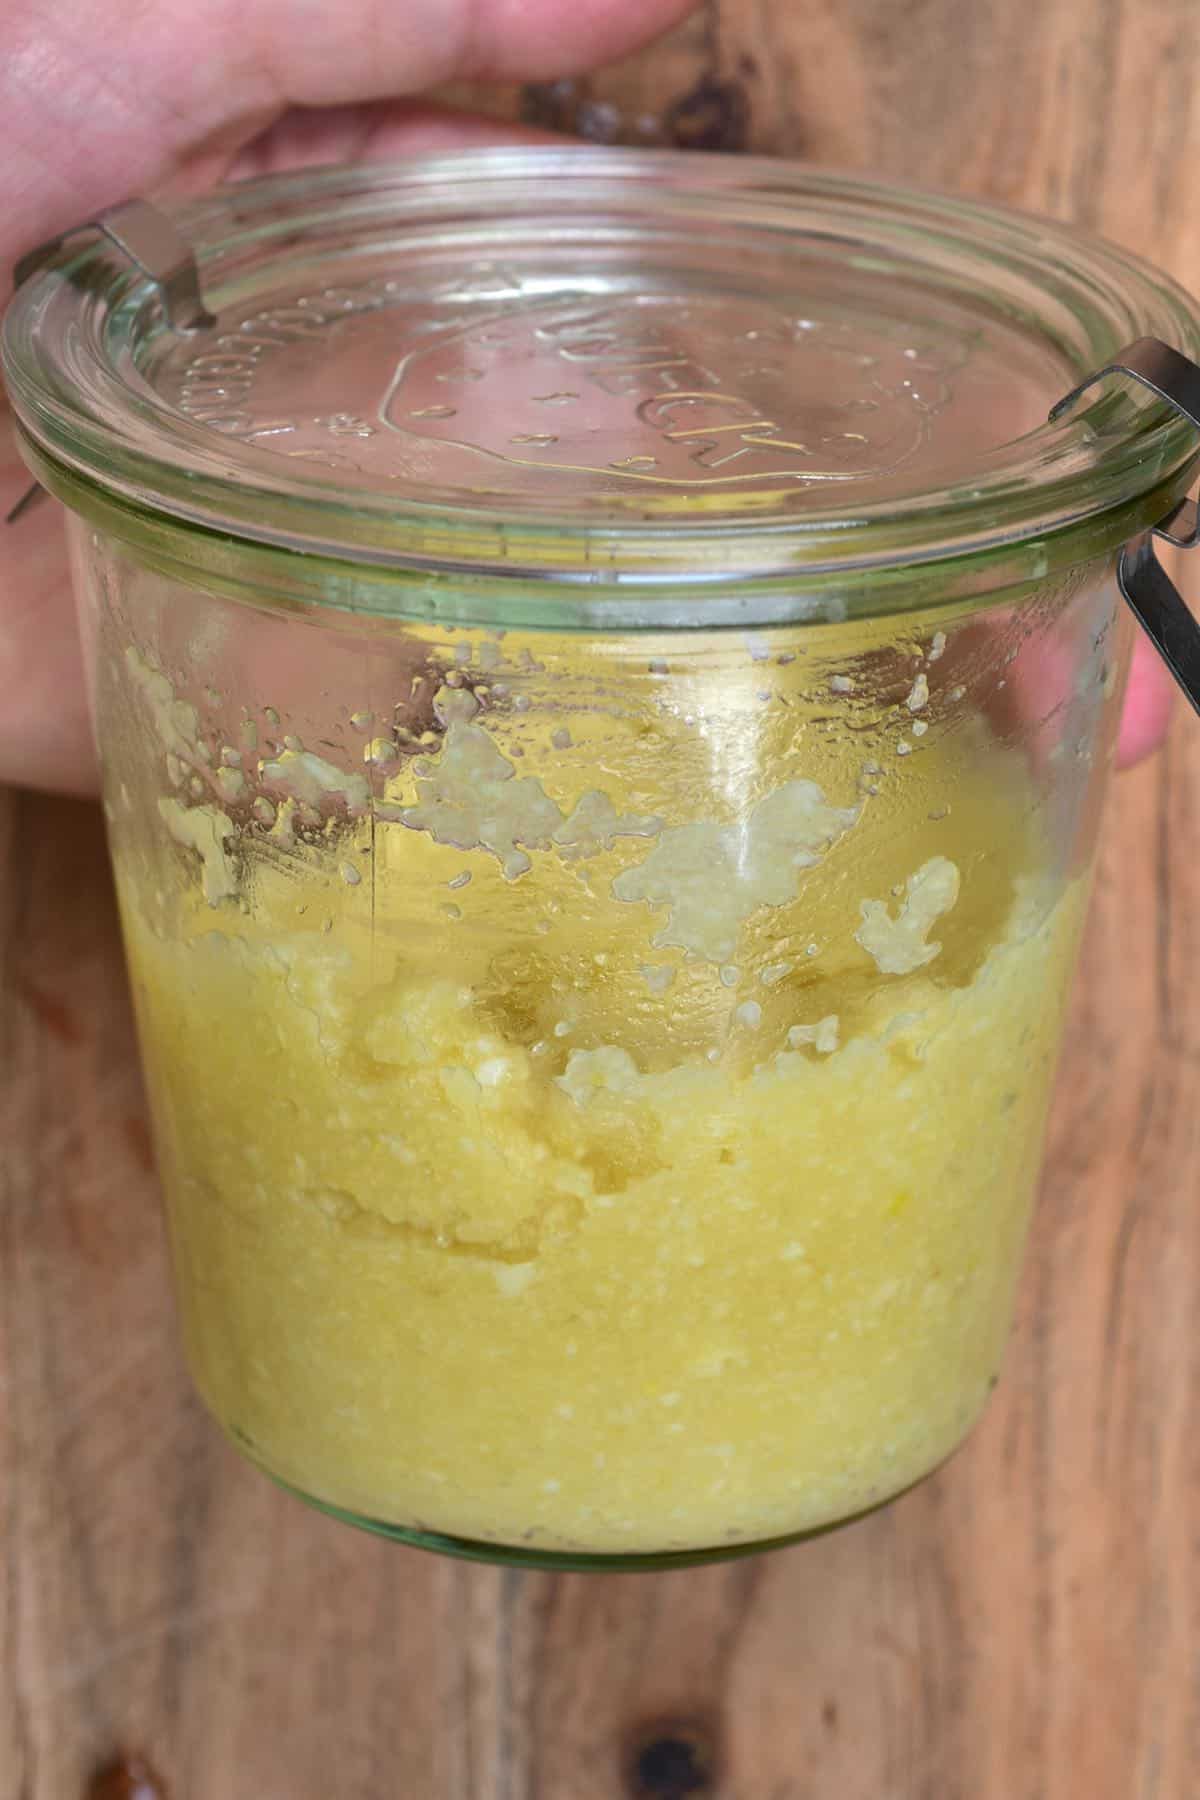 Garlic paste in a closed jar